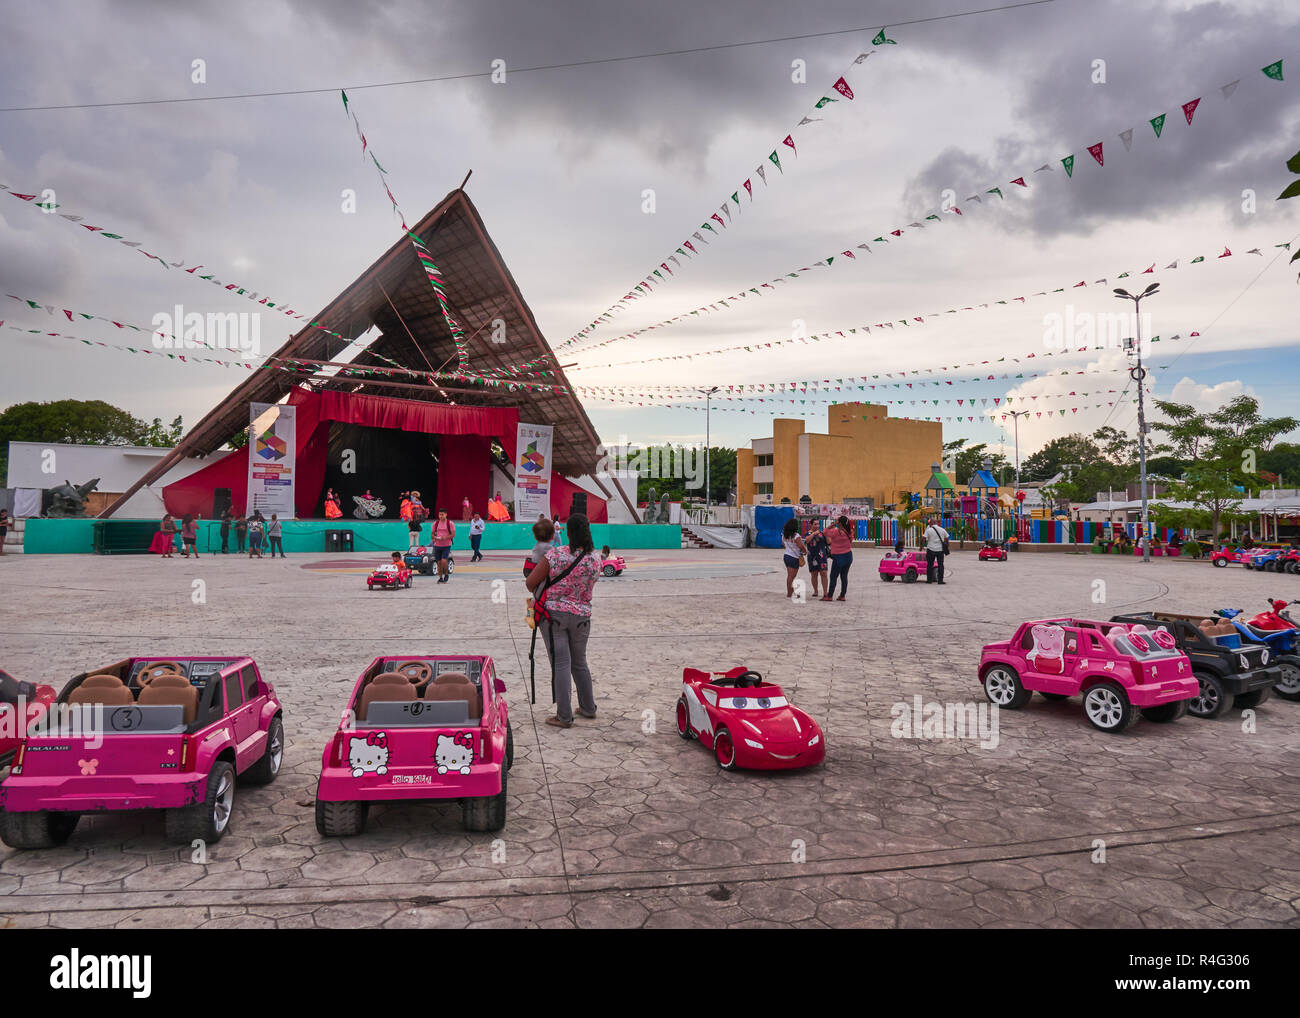 Kinder Auto Karussell auf dem Platz, El Parque de Las Palapas, Cancún, Mexiko, im September 8, 2018 8, 2018 Stockfoto